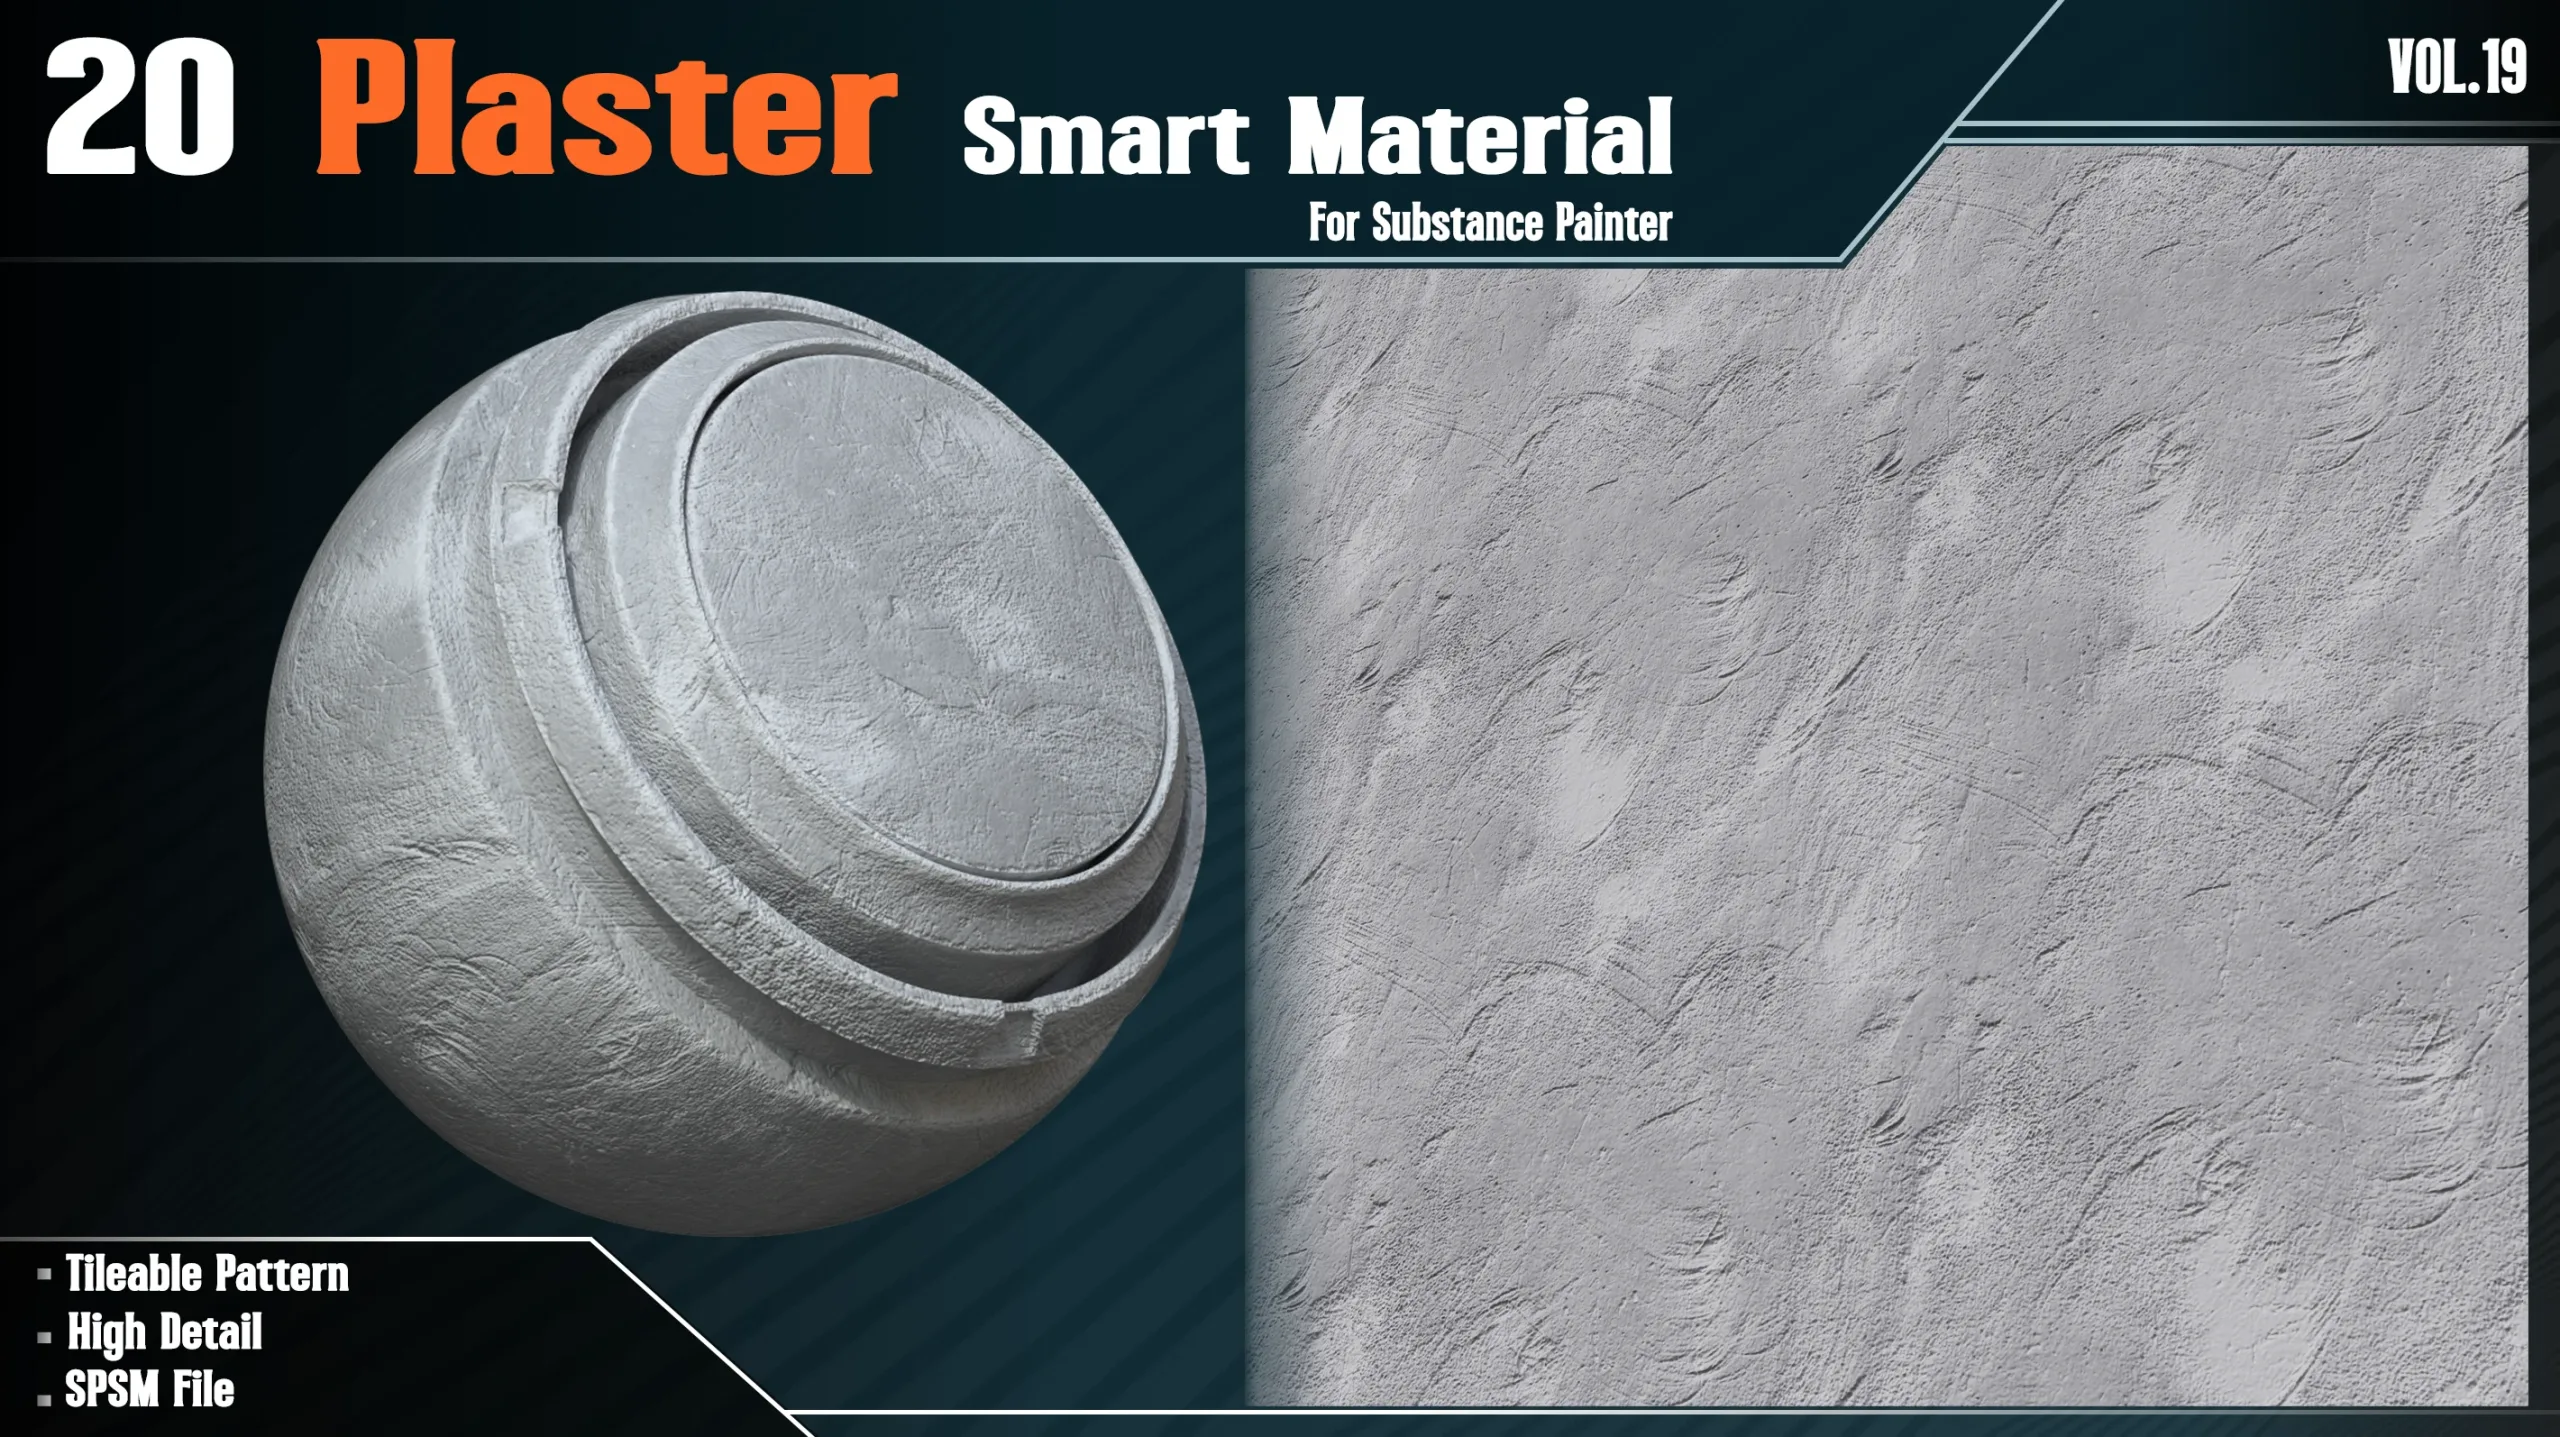 20 Plaster Smart Materials - VOL 19 (spsm file)